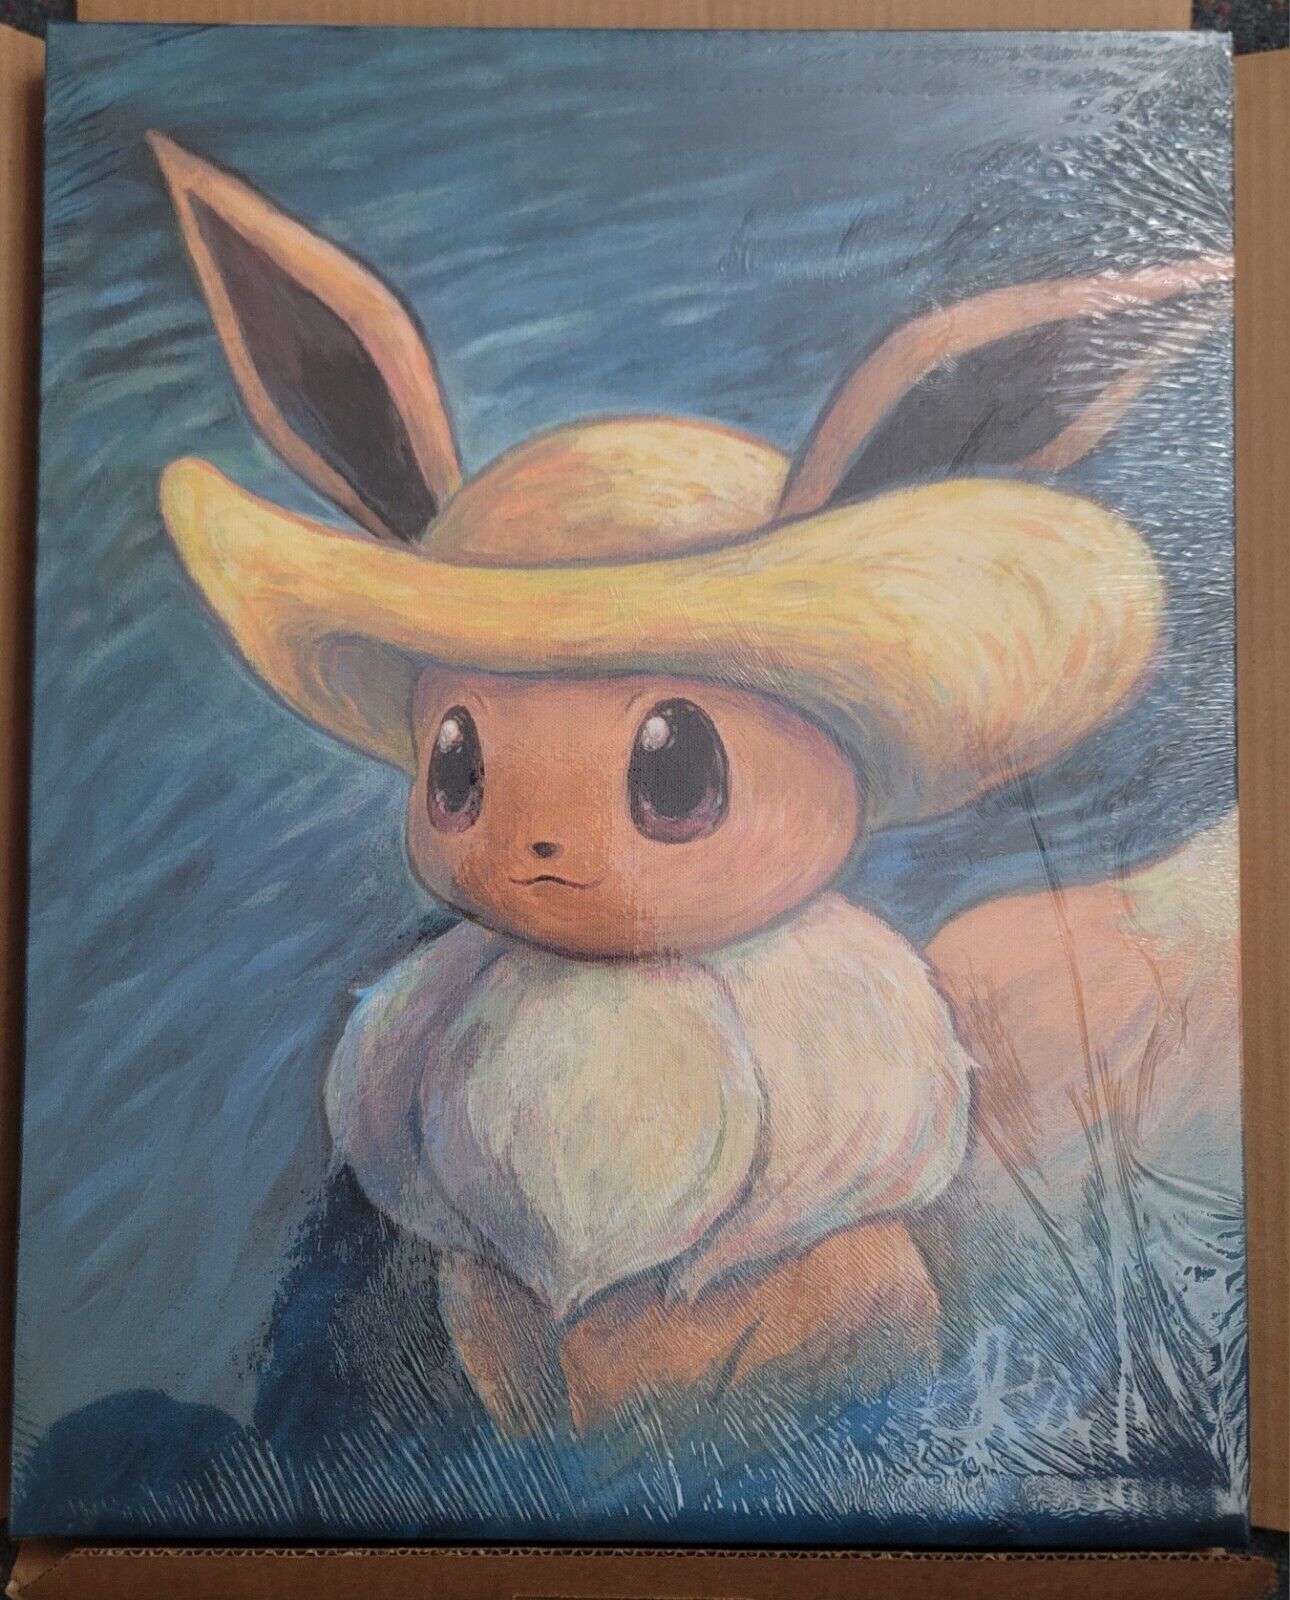 NEW Pokémon Center X Van Gogh: Eevee Self-Portrait W/ Straw Hat Canvas Wall Art